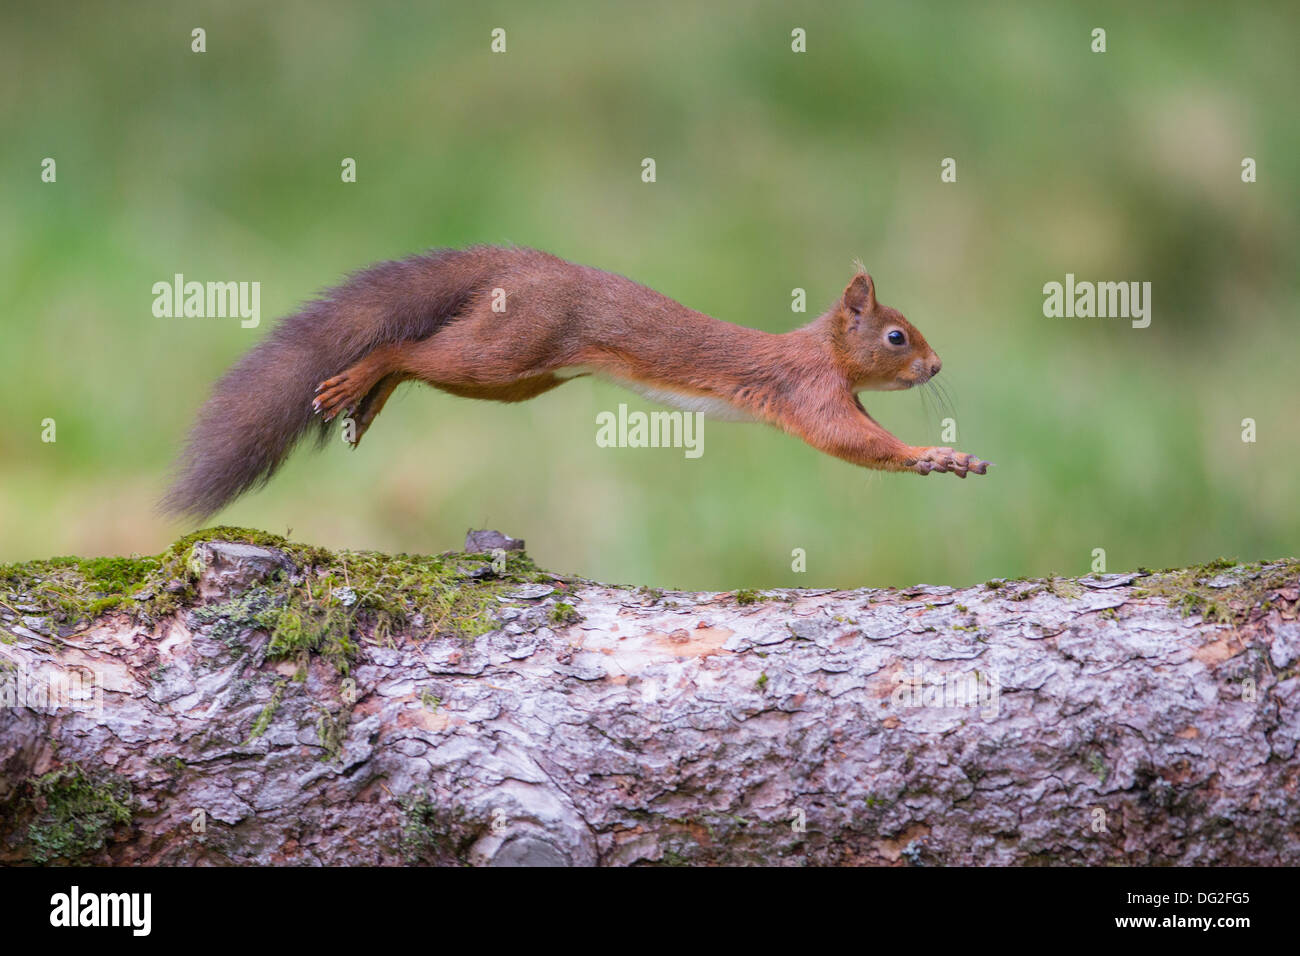 Red Squirrel (Sciurus vulgaris) jumping through the air in woodland setting. Yorkshire Dales, North Yorkshire, UK Stock Photo